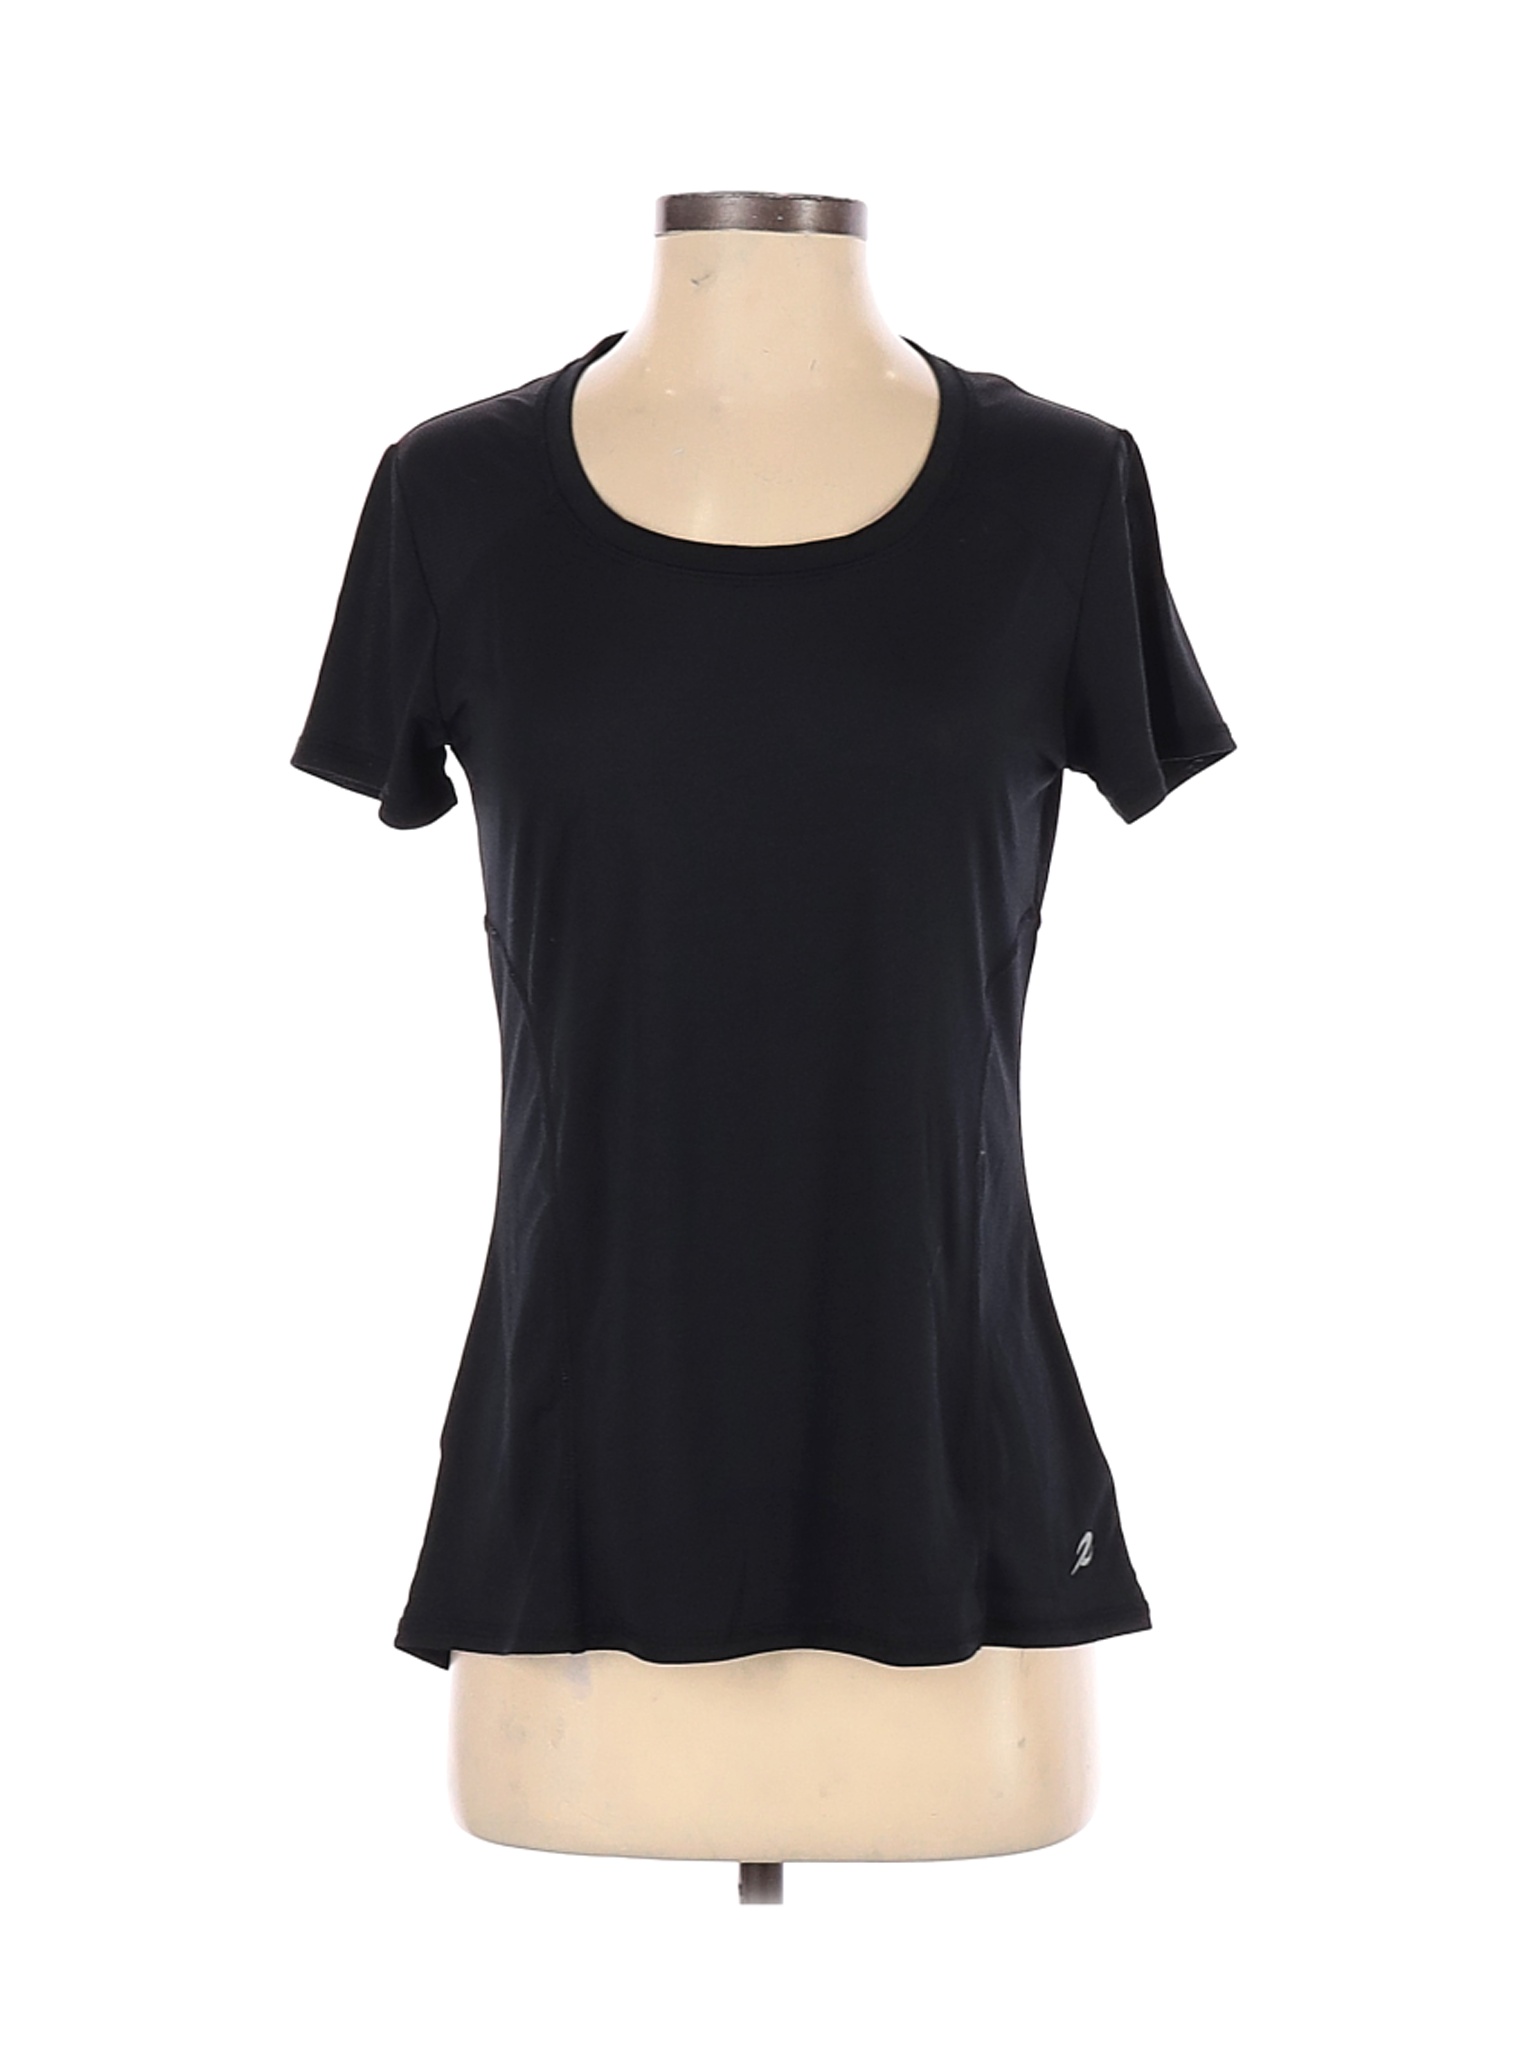 Energy Zone Women Black Active T-Shirt S | eBay